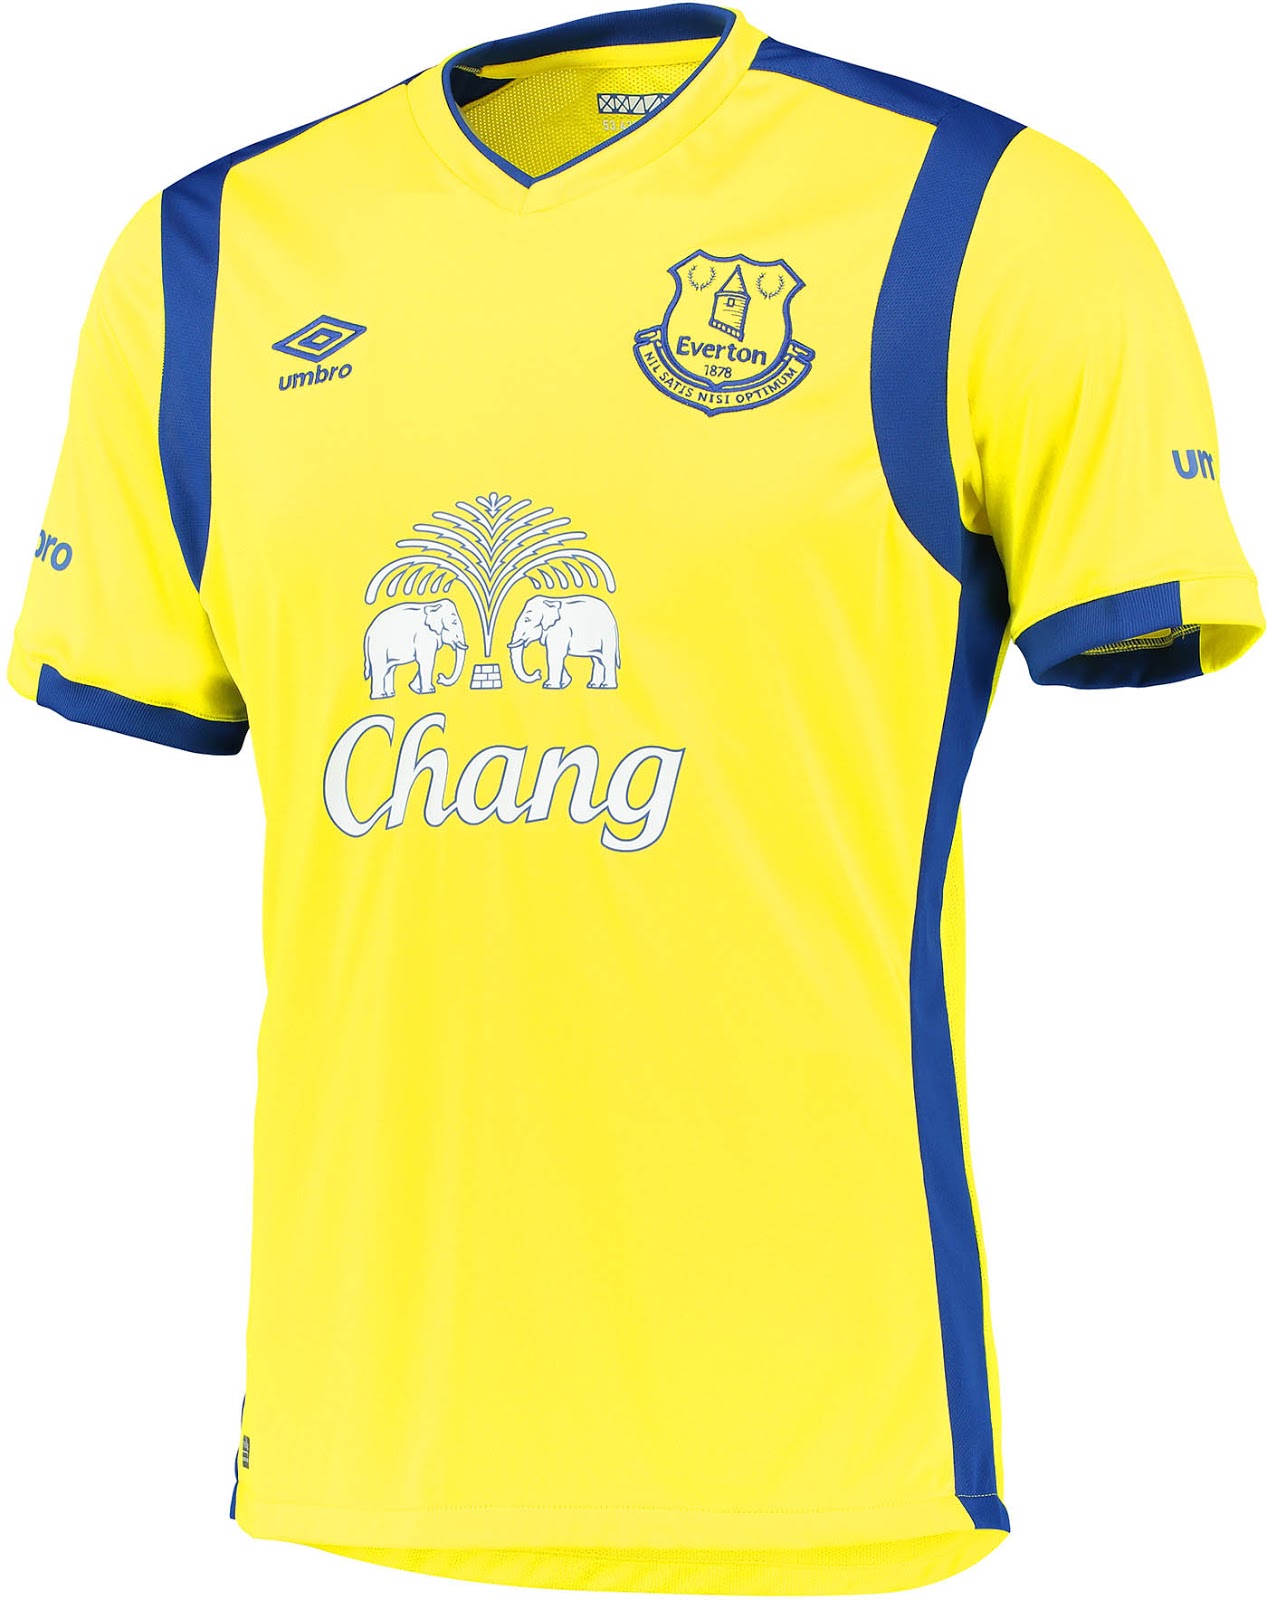 Le maillot third d'Everton 2016 - 2017 